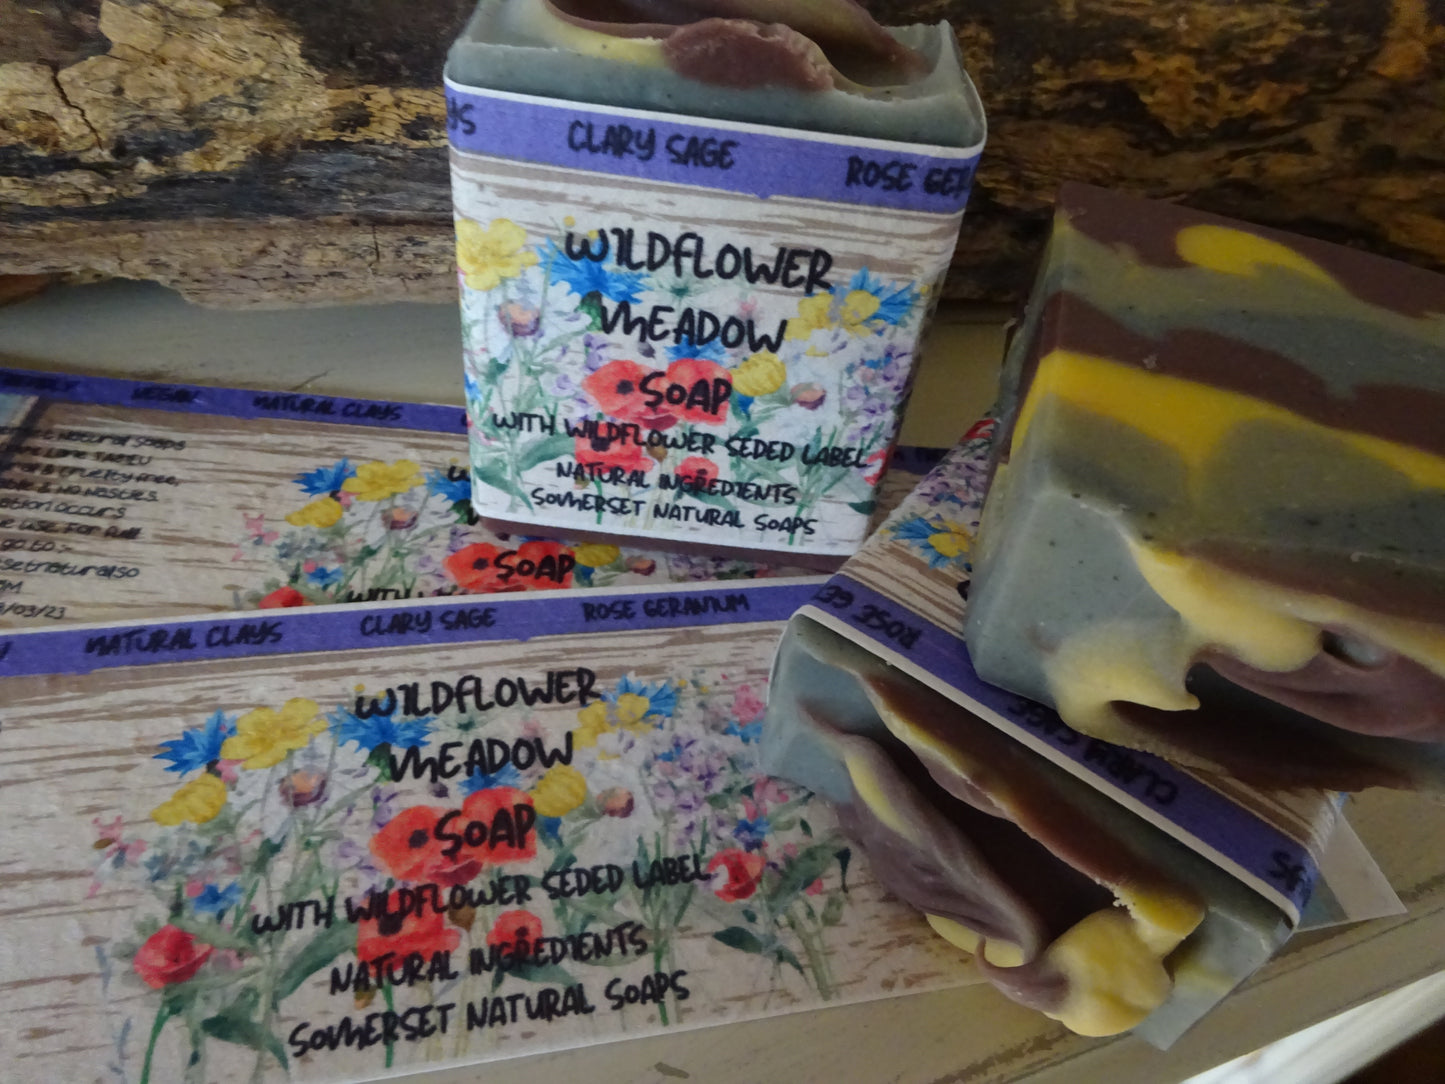 Wildflower Meadow Vegan Soap